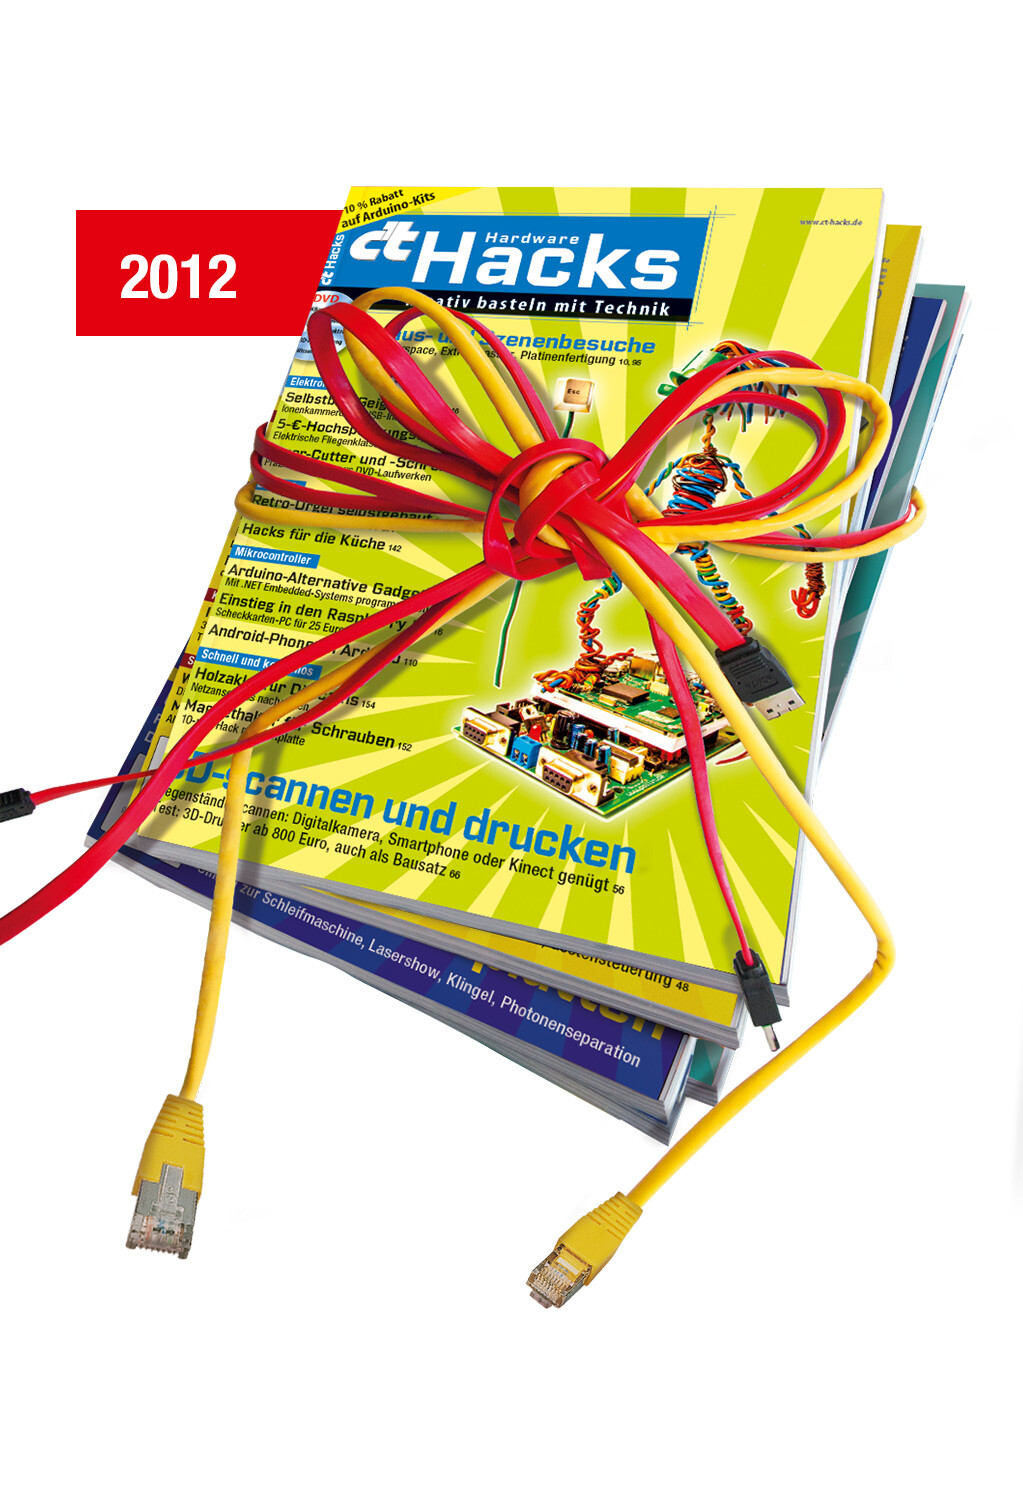 c't Hardware Hacks Jahrgang 2012 mit 75% Rabatt